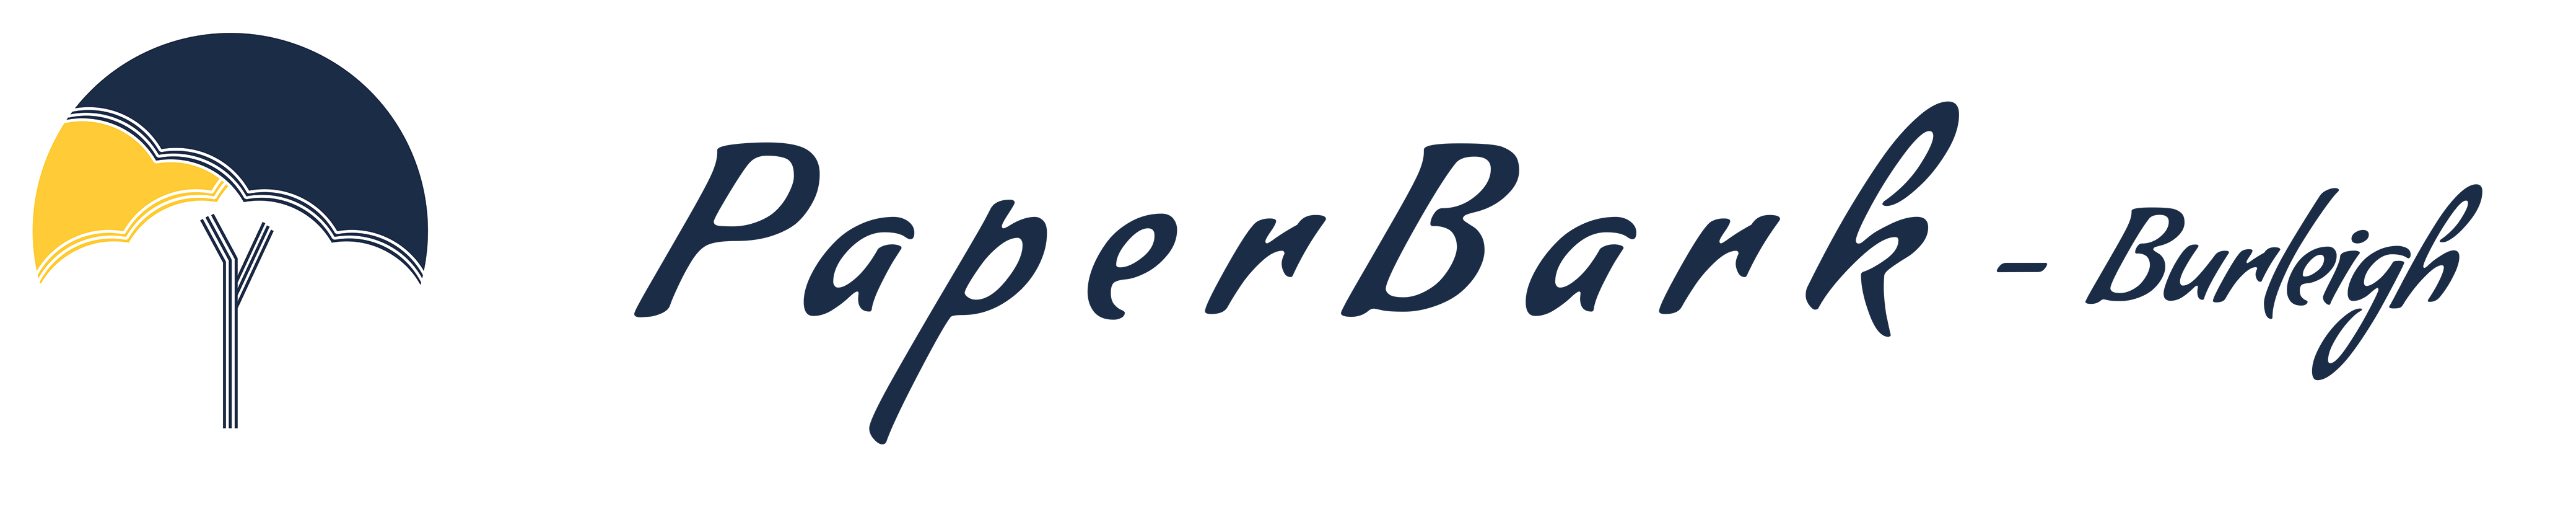 Paperbark Burleigh | Gold Coast Cafe Logo